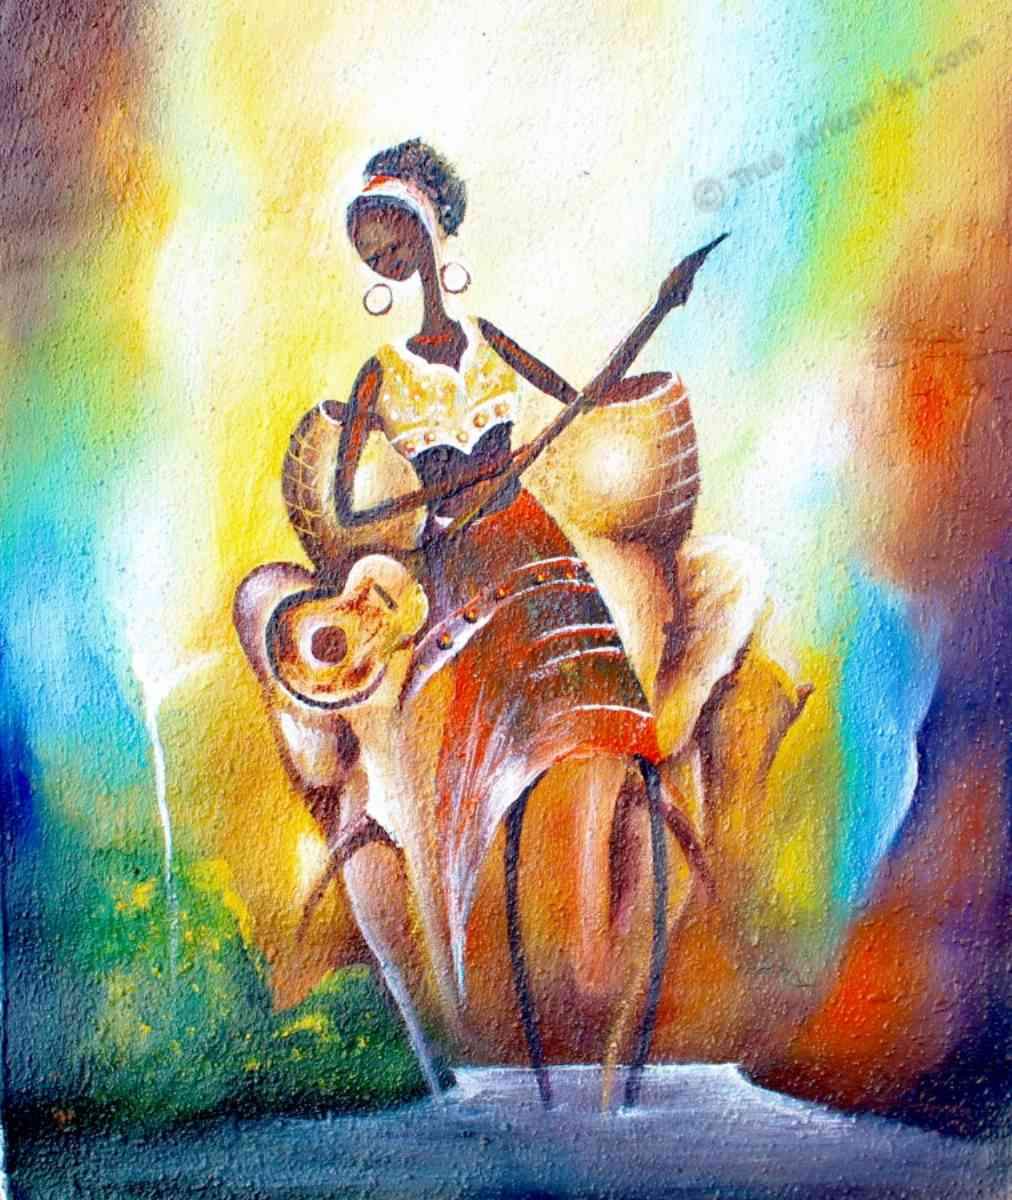 Willie Wamuti  |  Kenya  |  "Inspired"  |  True African Art .com